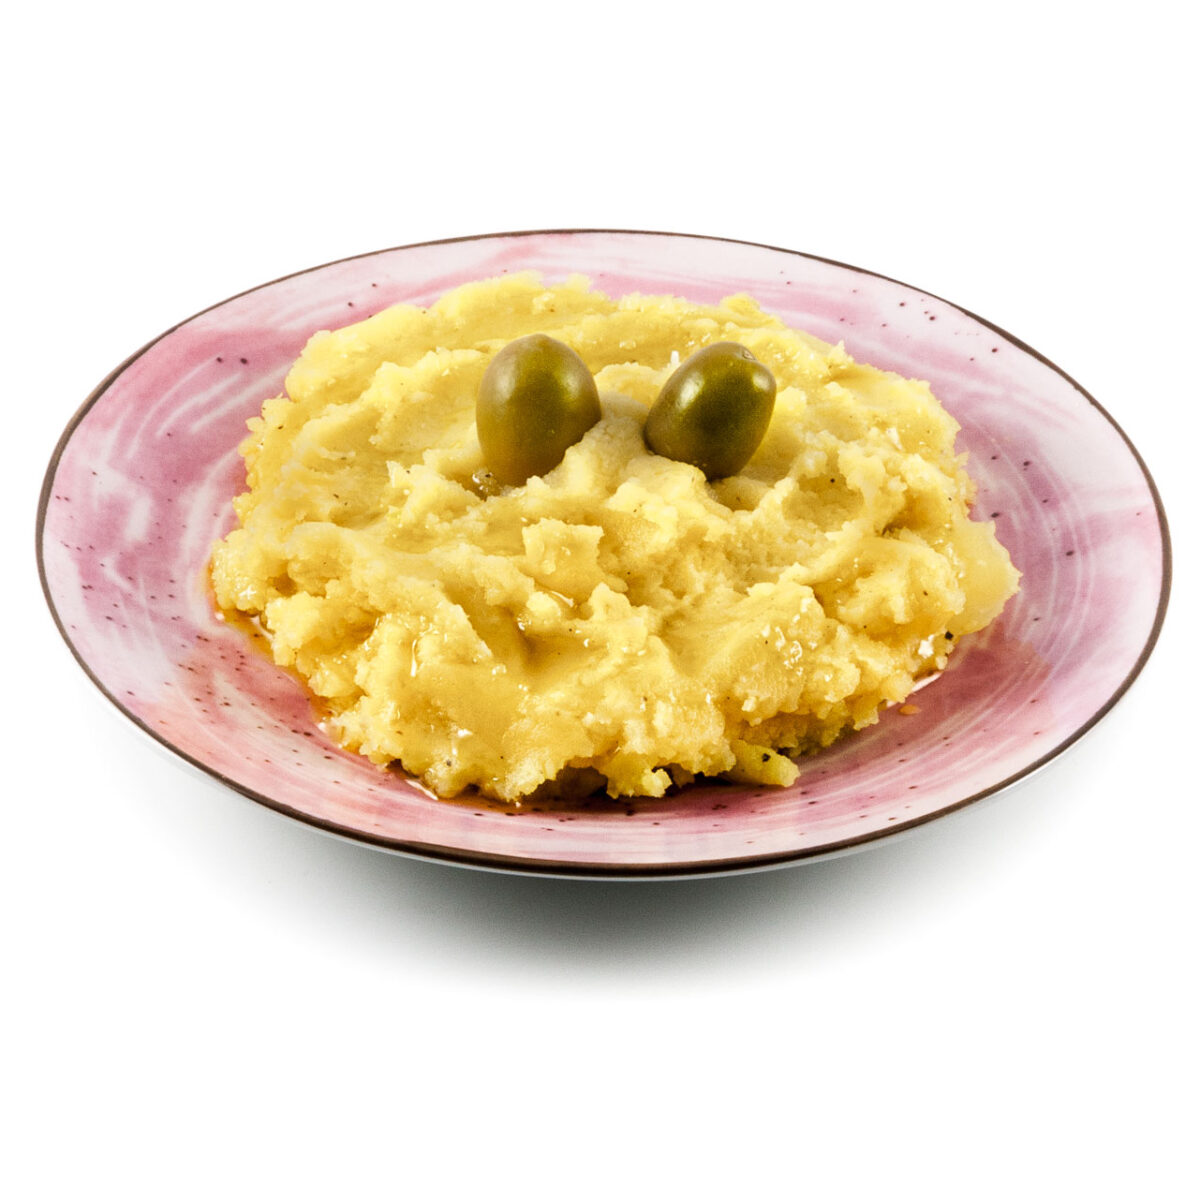 Skordalia – bramborový dip s příchutí česneku